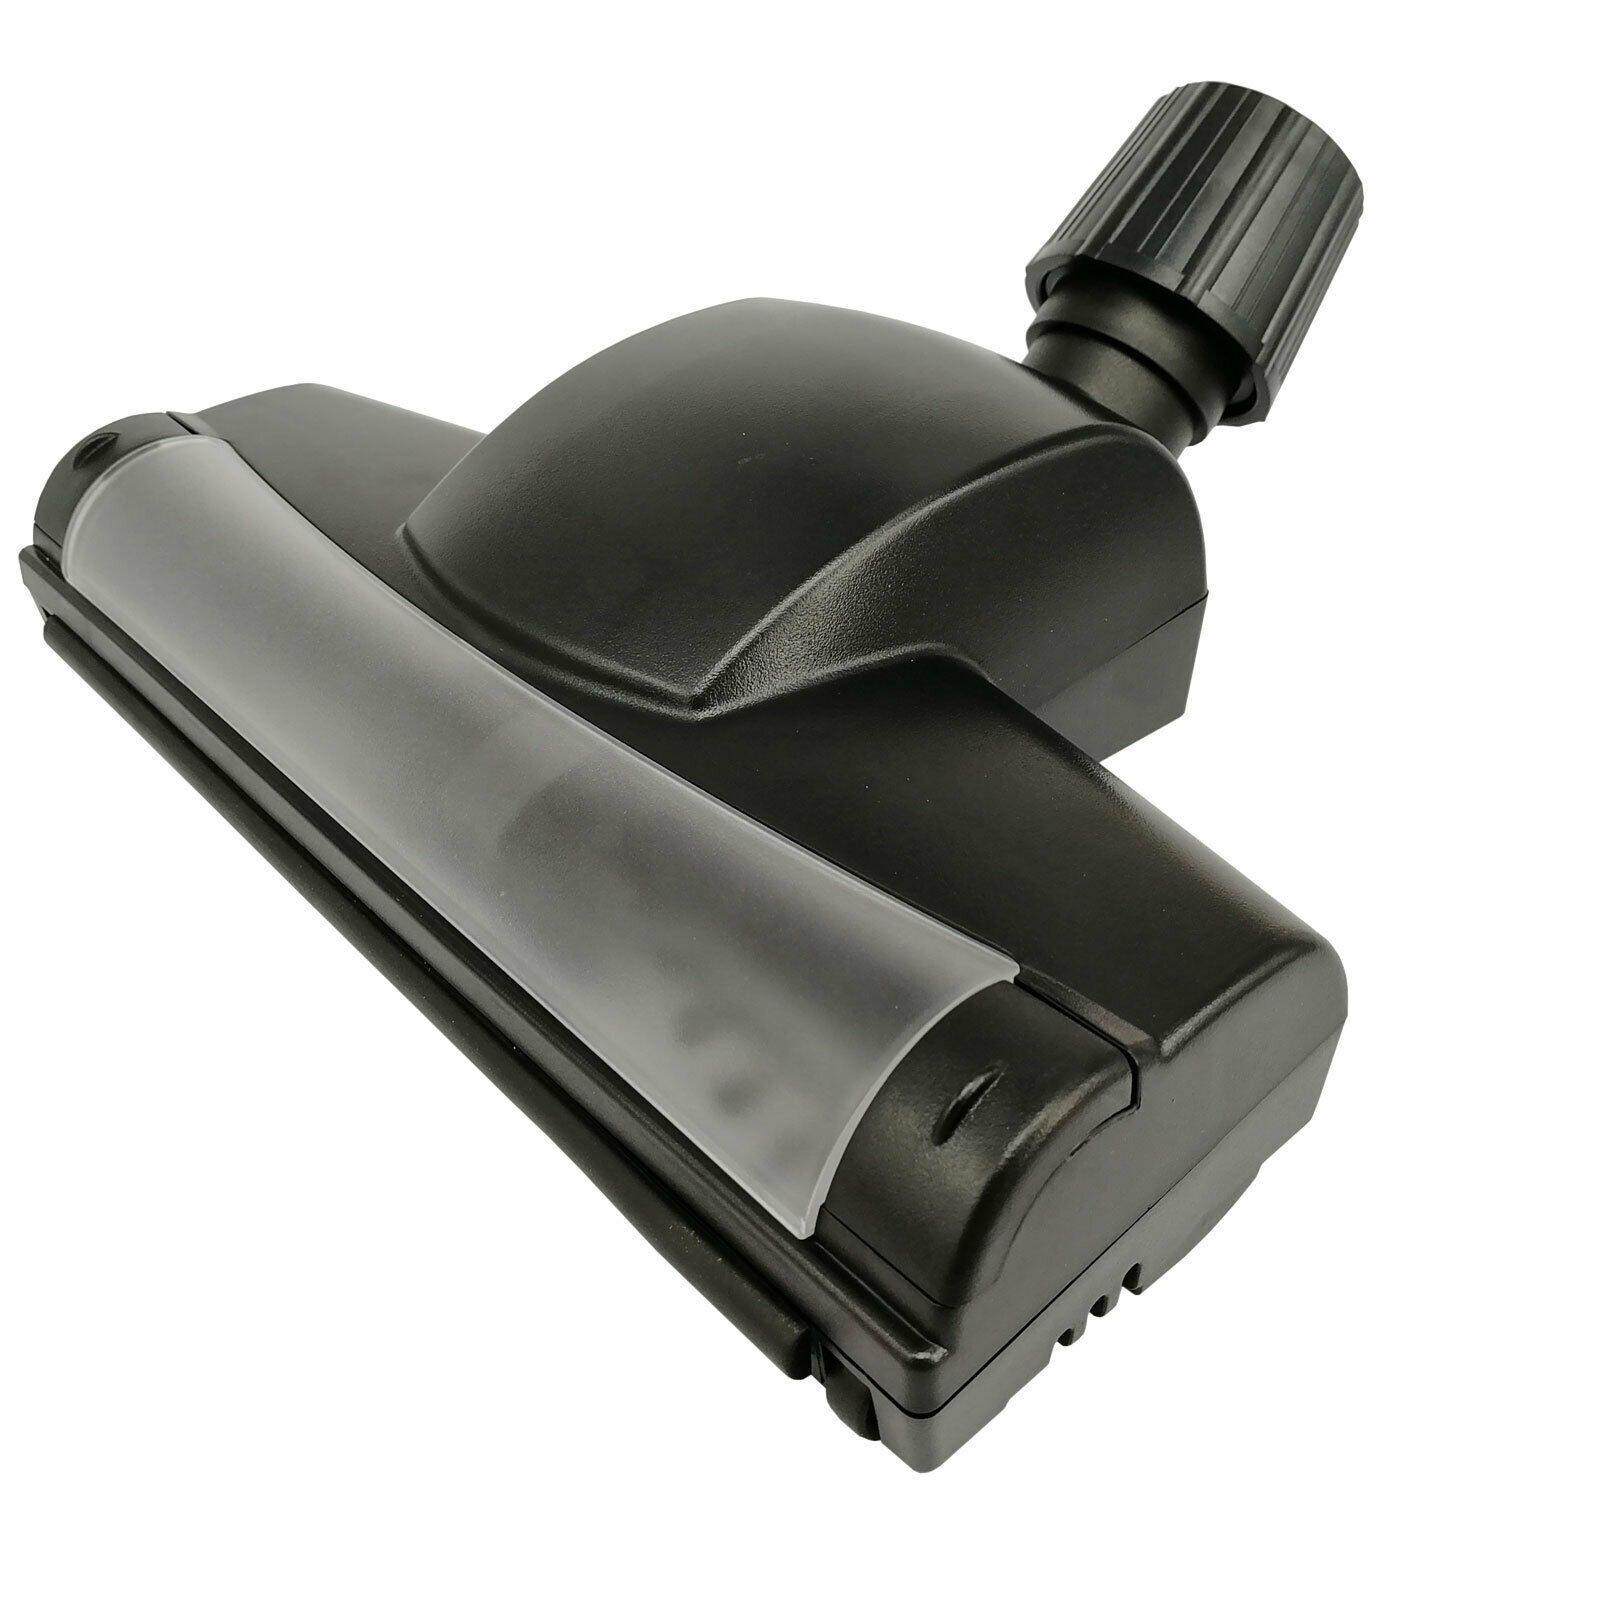 Turbo Head Floor Nozzle Brush For Karcher MV 6 P Premium WD 6 - 1.348-275.0 Sparesbarn